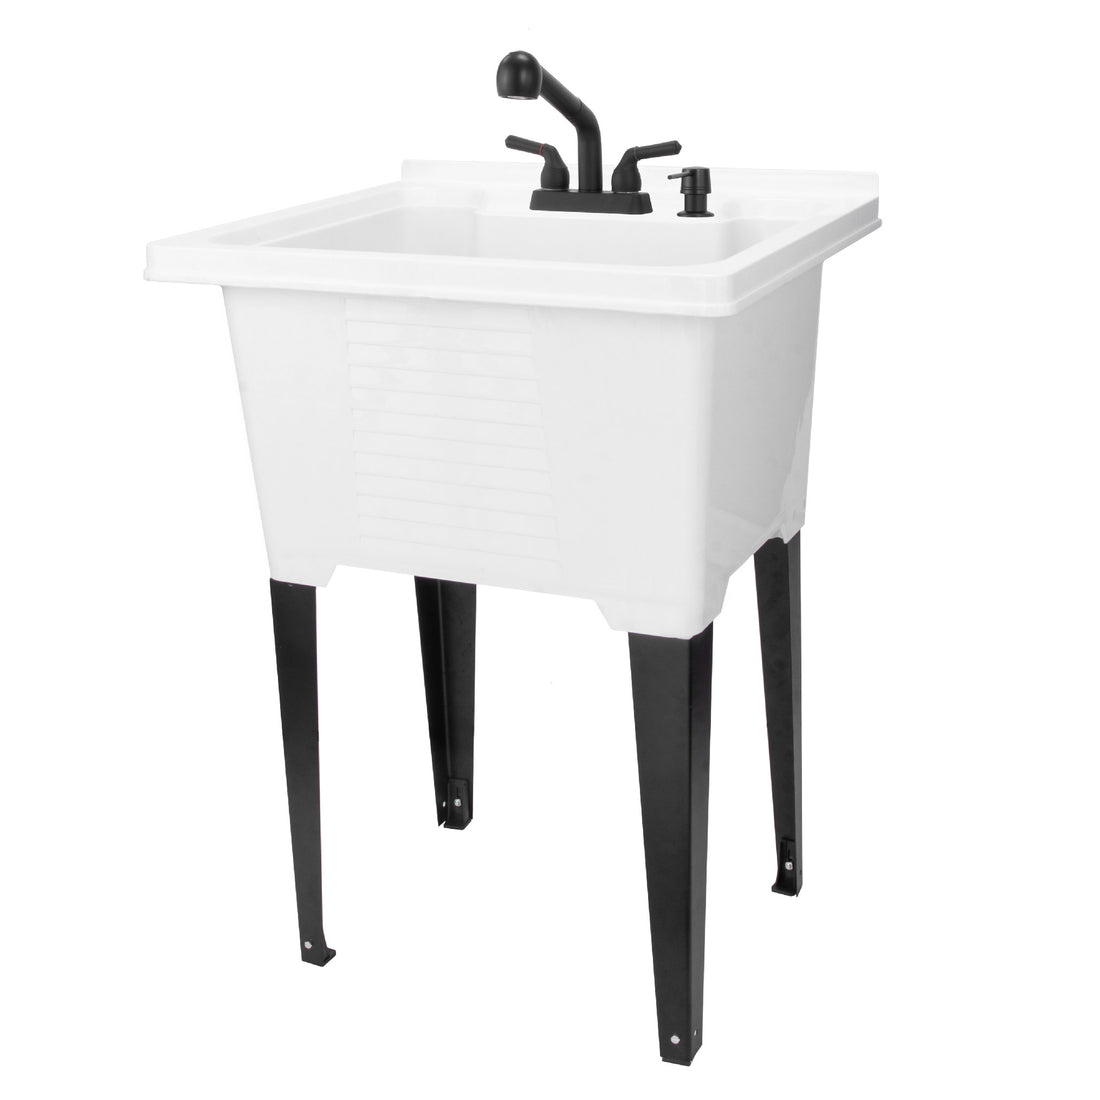 Tehila Luxe Freestanding White Utility Sink with Black Finish Pull-Out Faucet - Utility sinks vanites Tehila